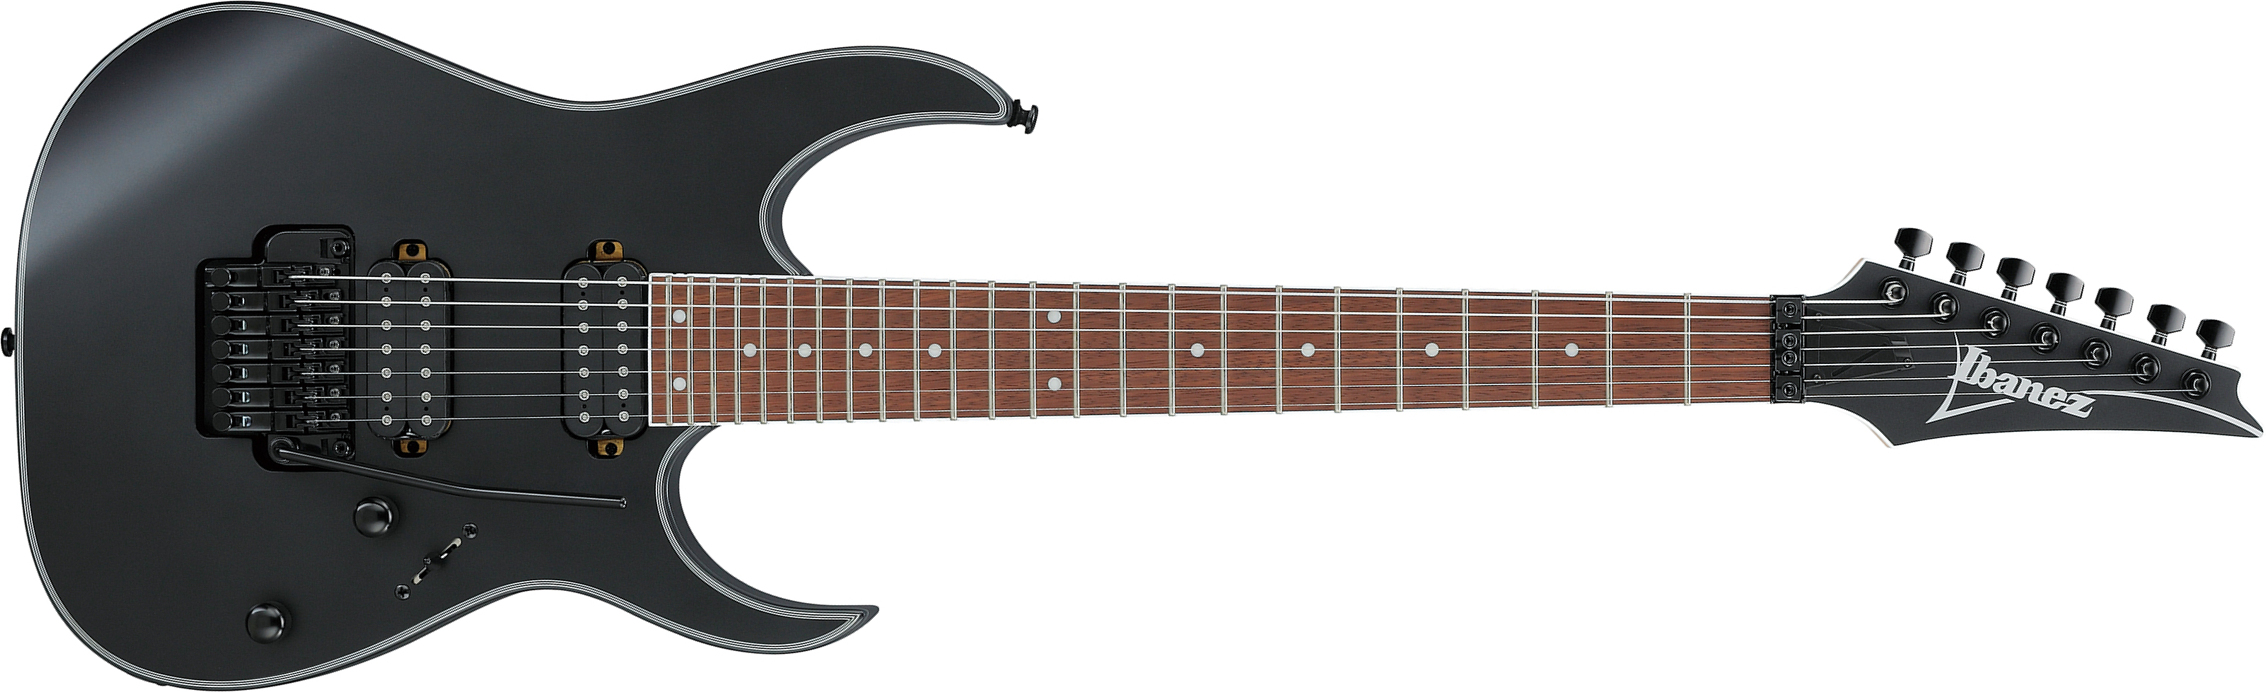 Ibanez Rg7320ex Bkf 7c 2h Fr Jat - Black Flat - Guitarra eléctrica de 7 cuerdas - Main picture